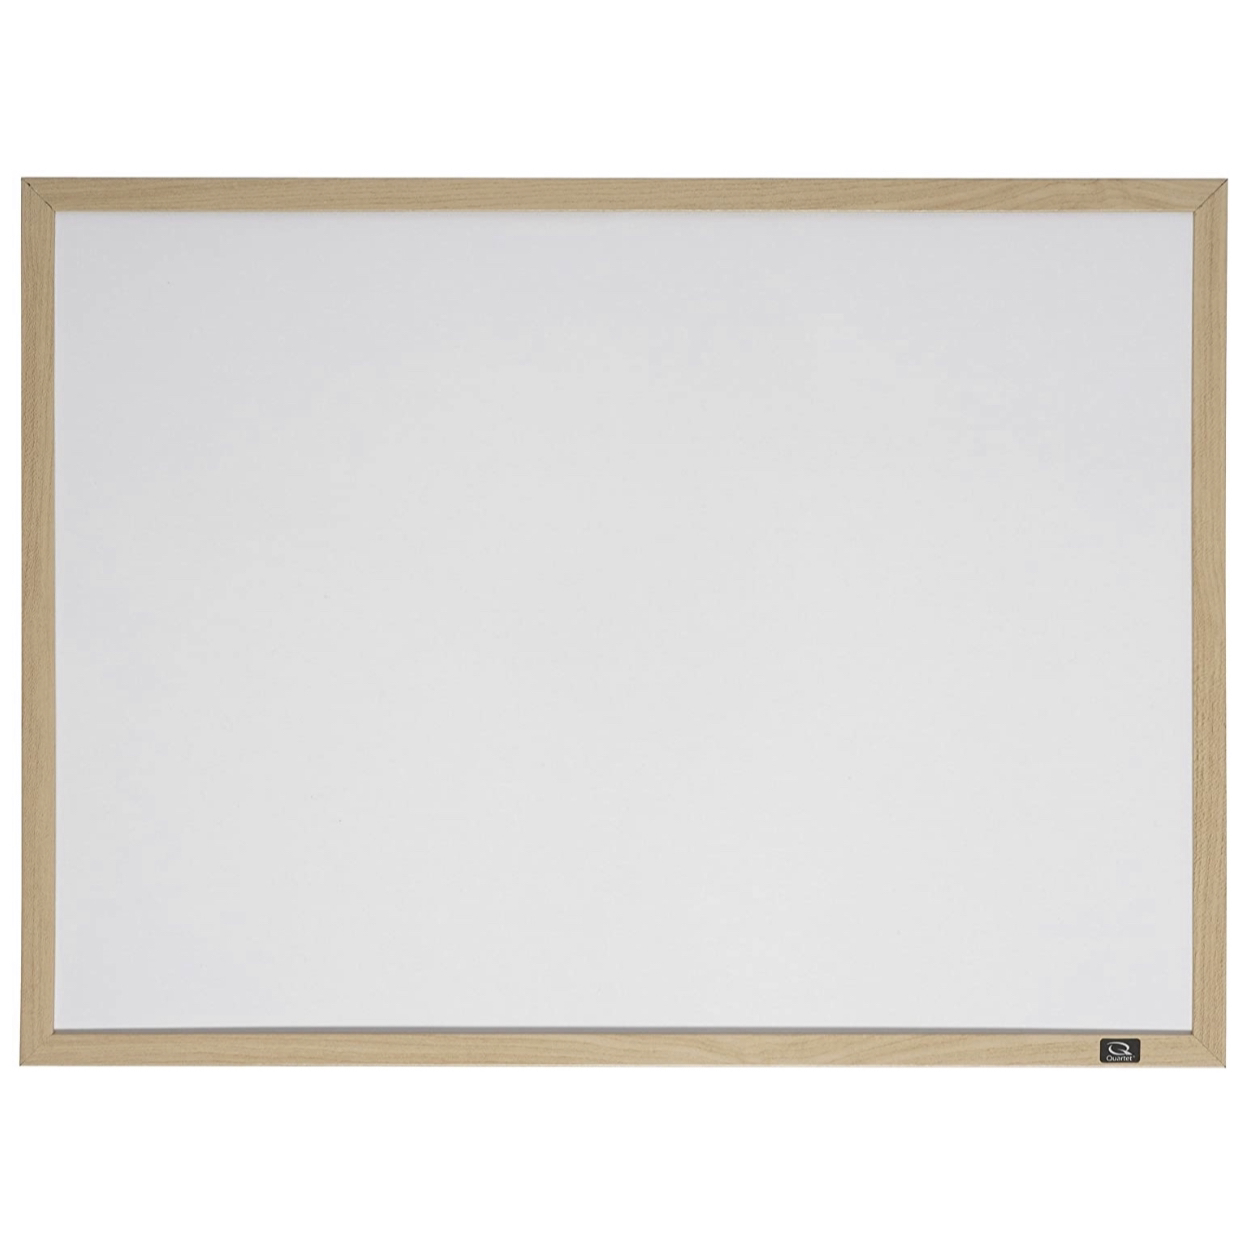 Whiteboard 23"x 35", Oak Finish Frame